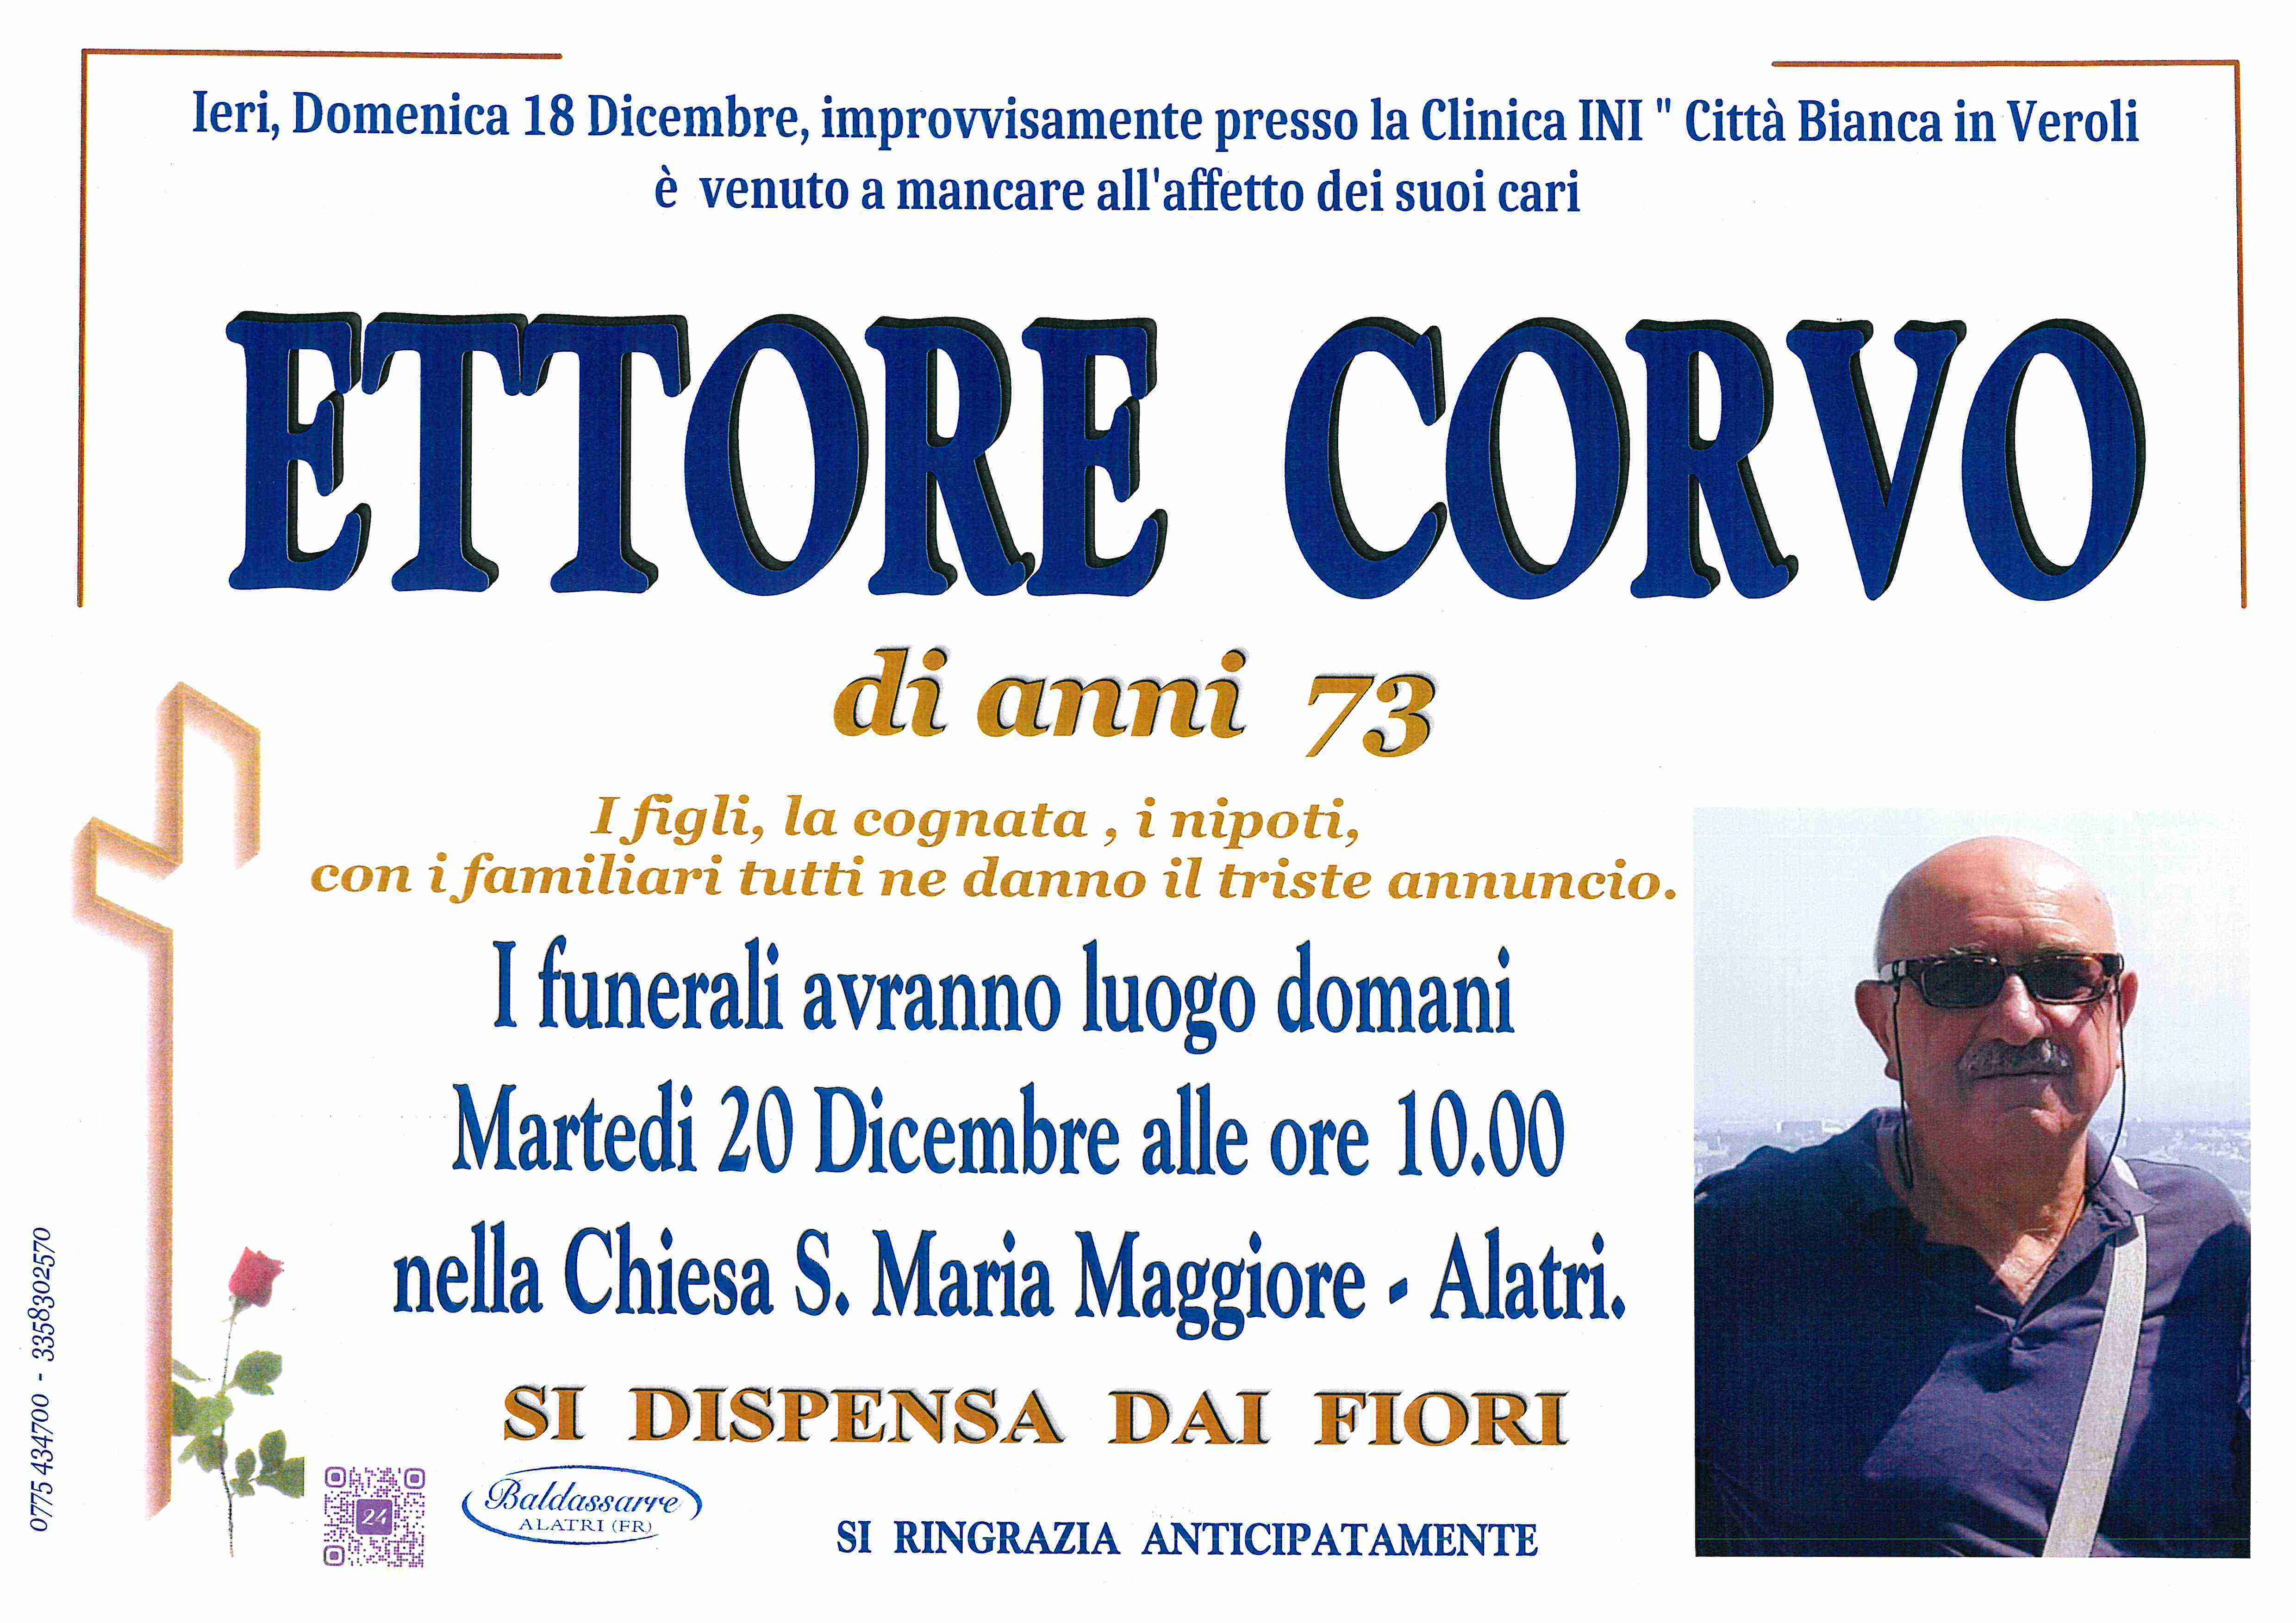 Ettore Corvo